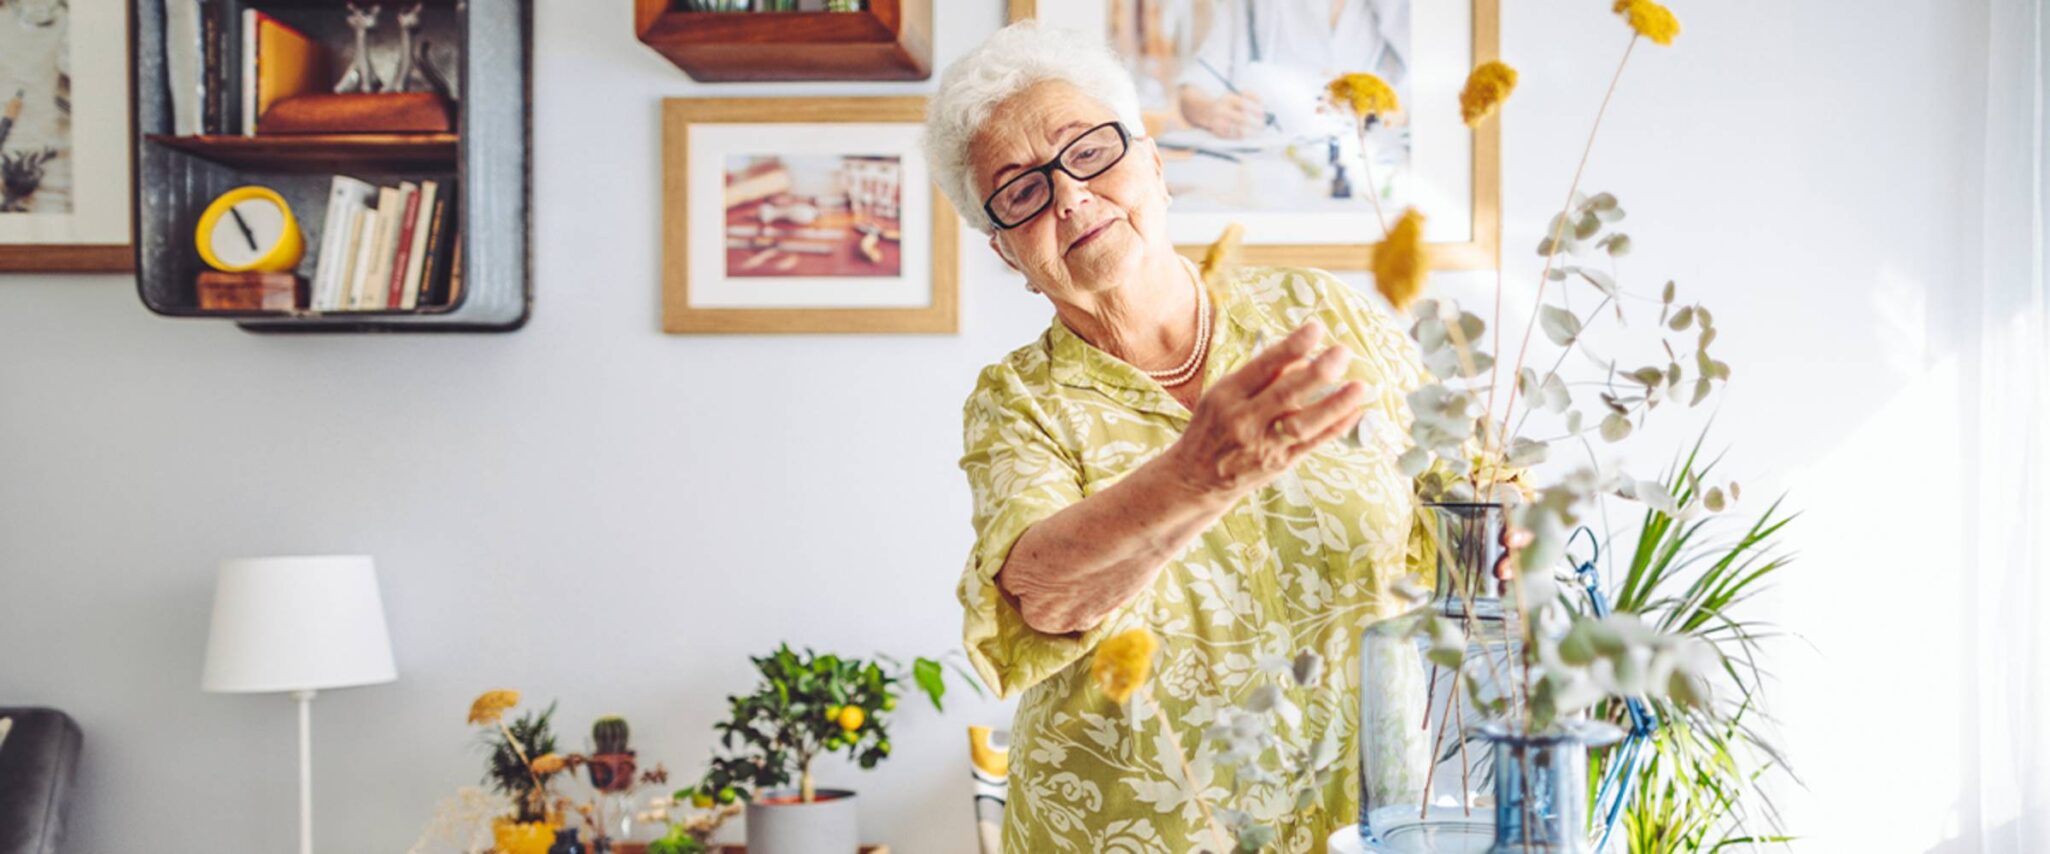 An elderly woman arranges flowers in her senior apartment